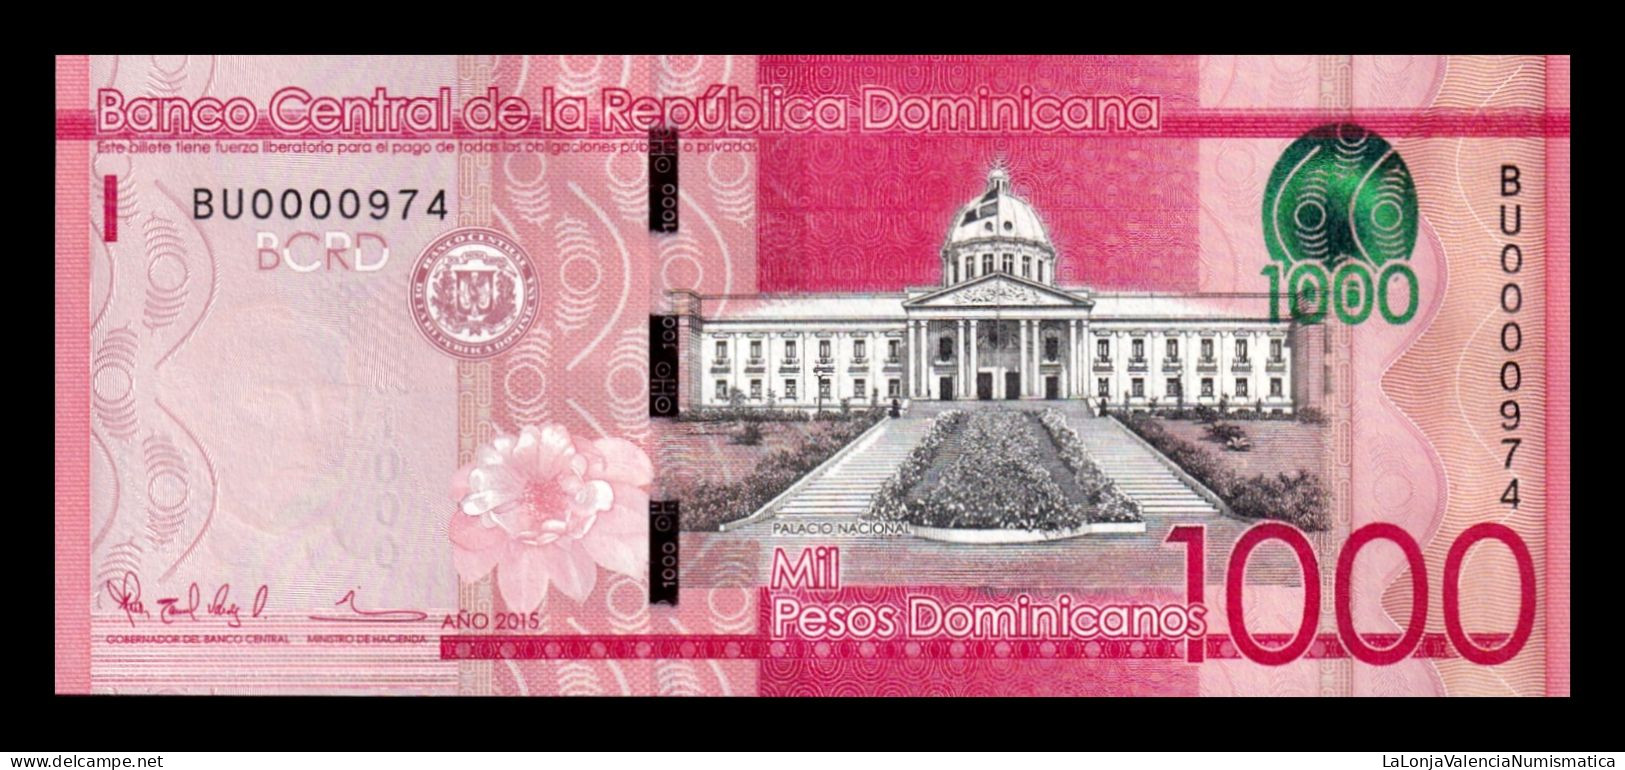 República Dominicana 1000 Pesos Dominicanos 2015 Pick 193b Low Serial 974 Sc Unc - Dominicaine